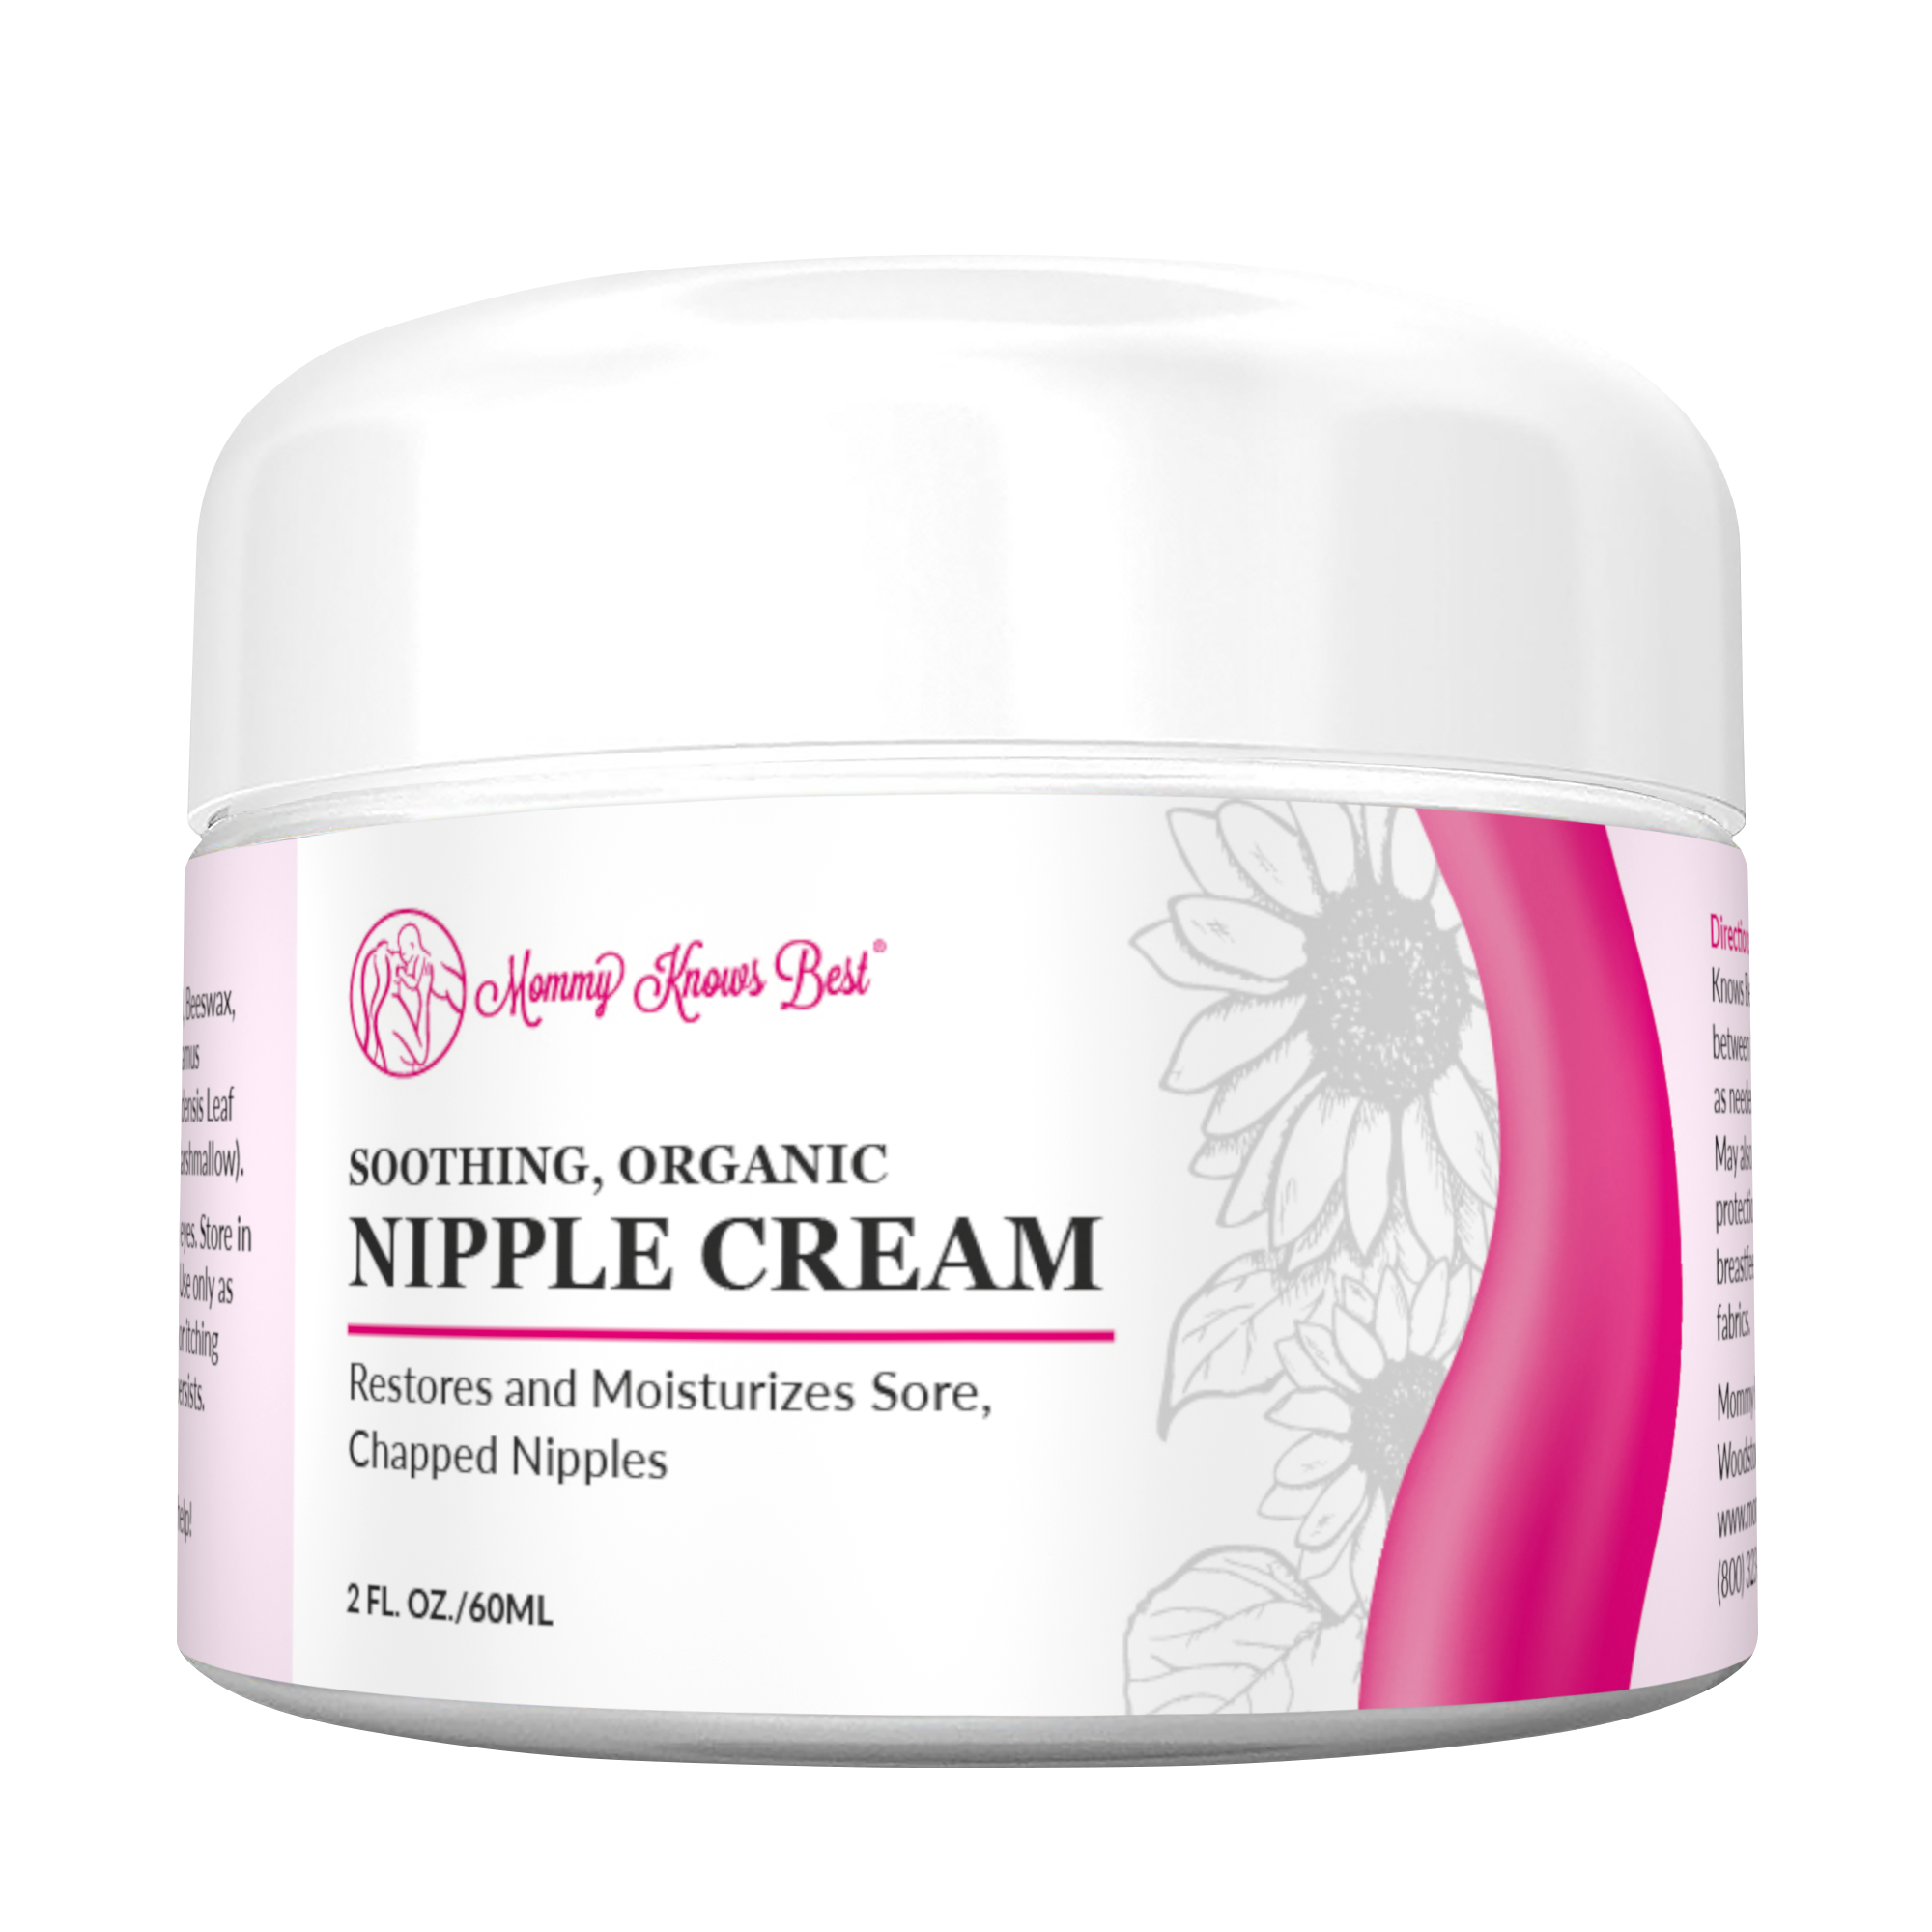 The 2020 Best of Baby Winner for Top Nipple Cream